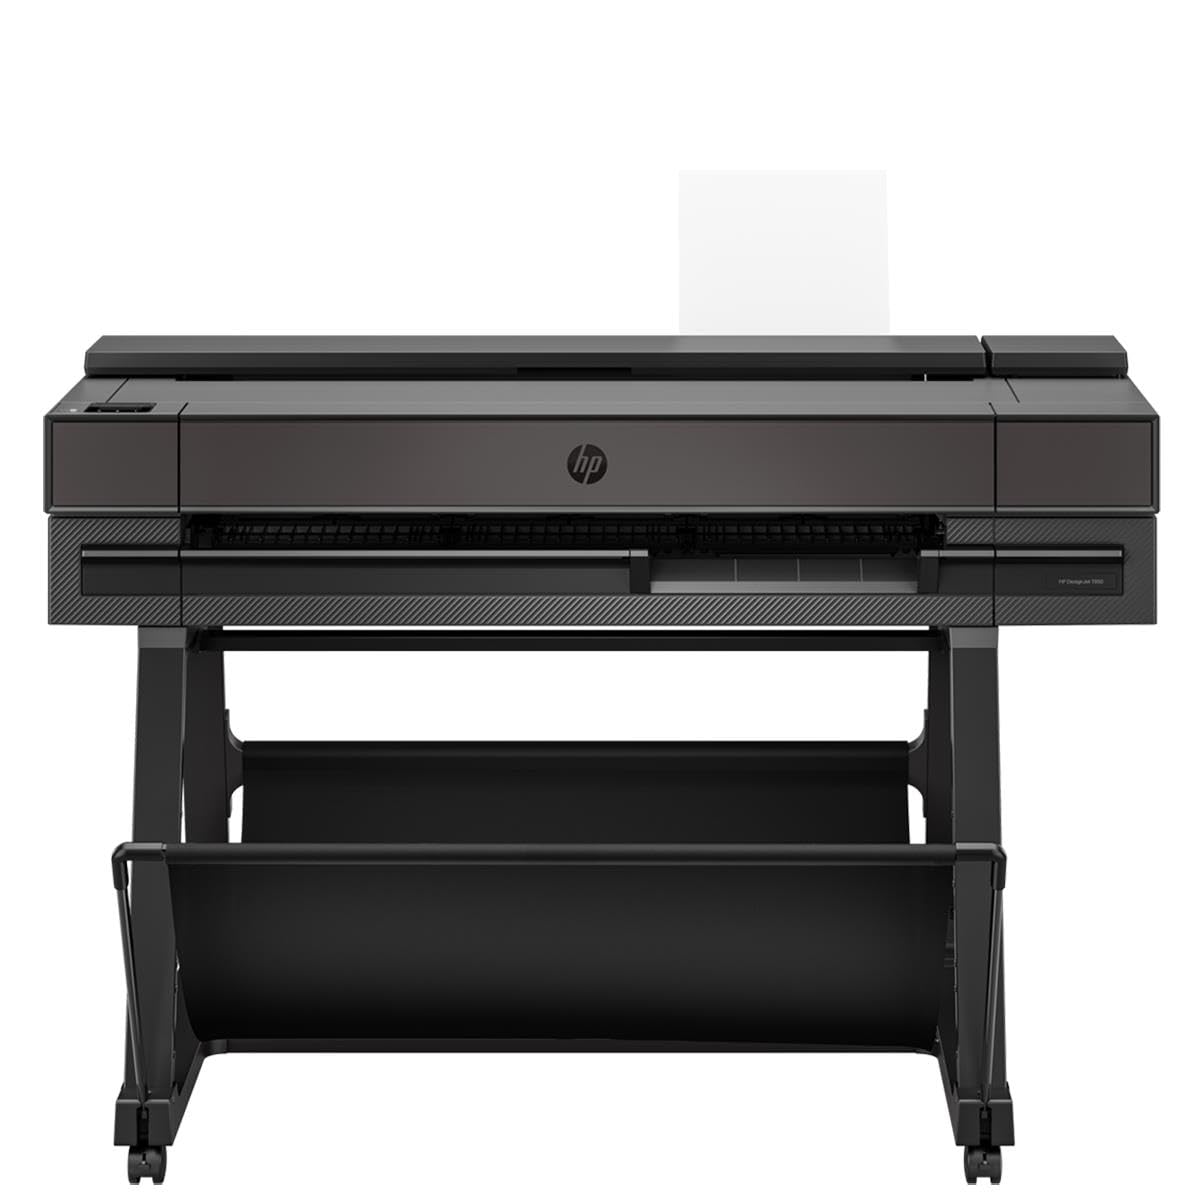 HP DesignJet T850 Large Format 36-inch Color Plotter Printer (2Y9H0A)